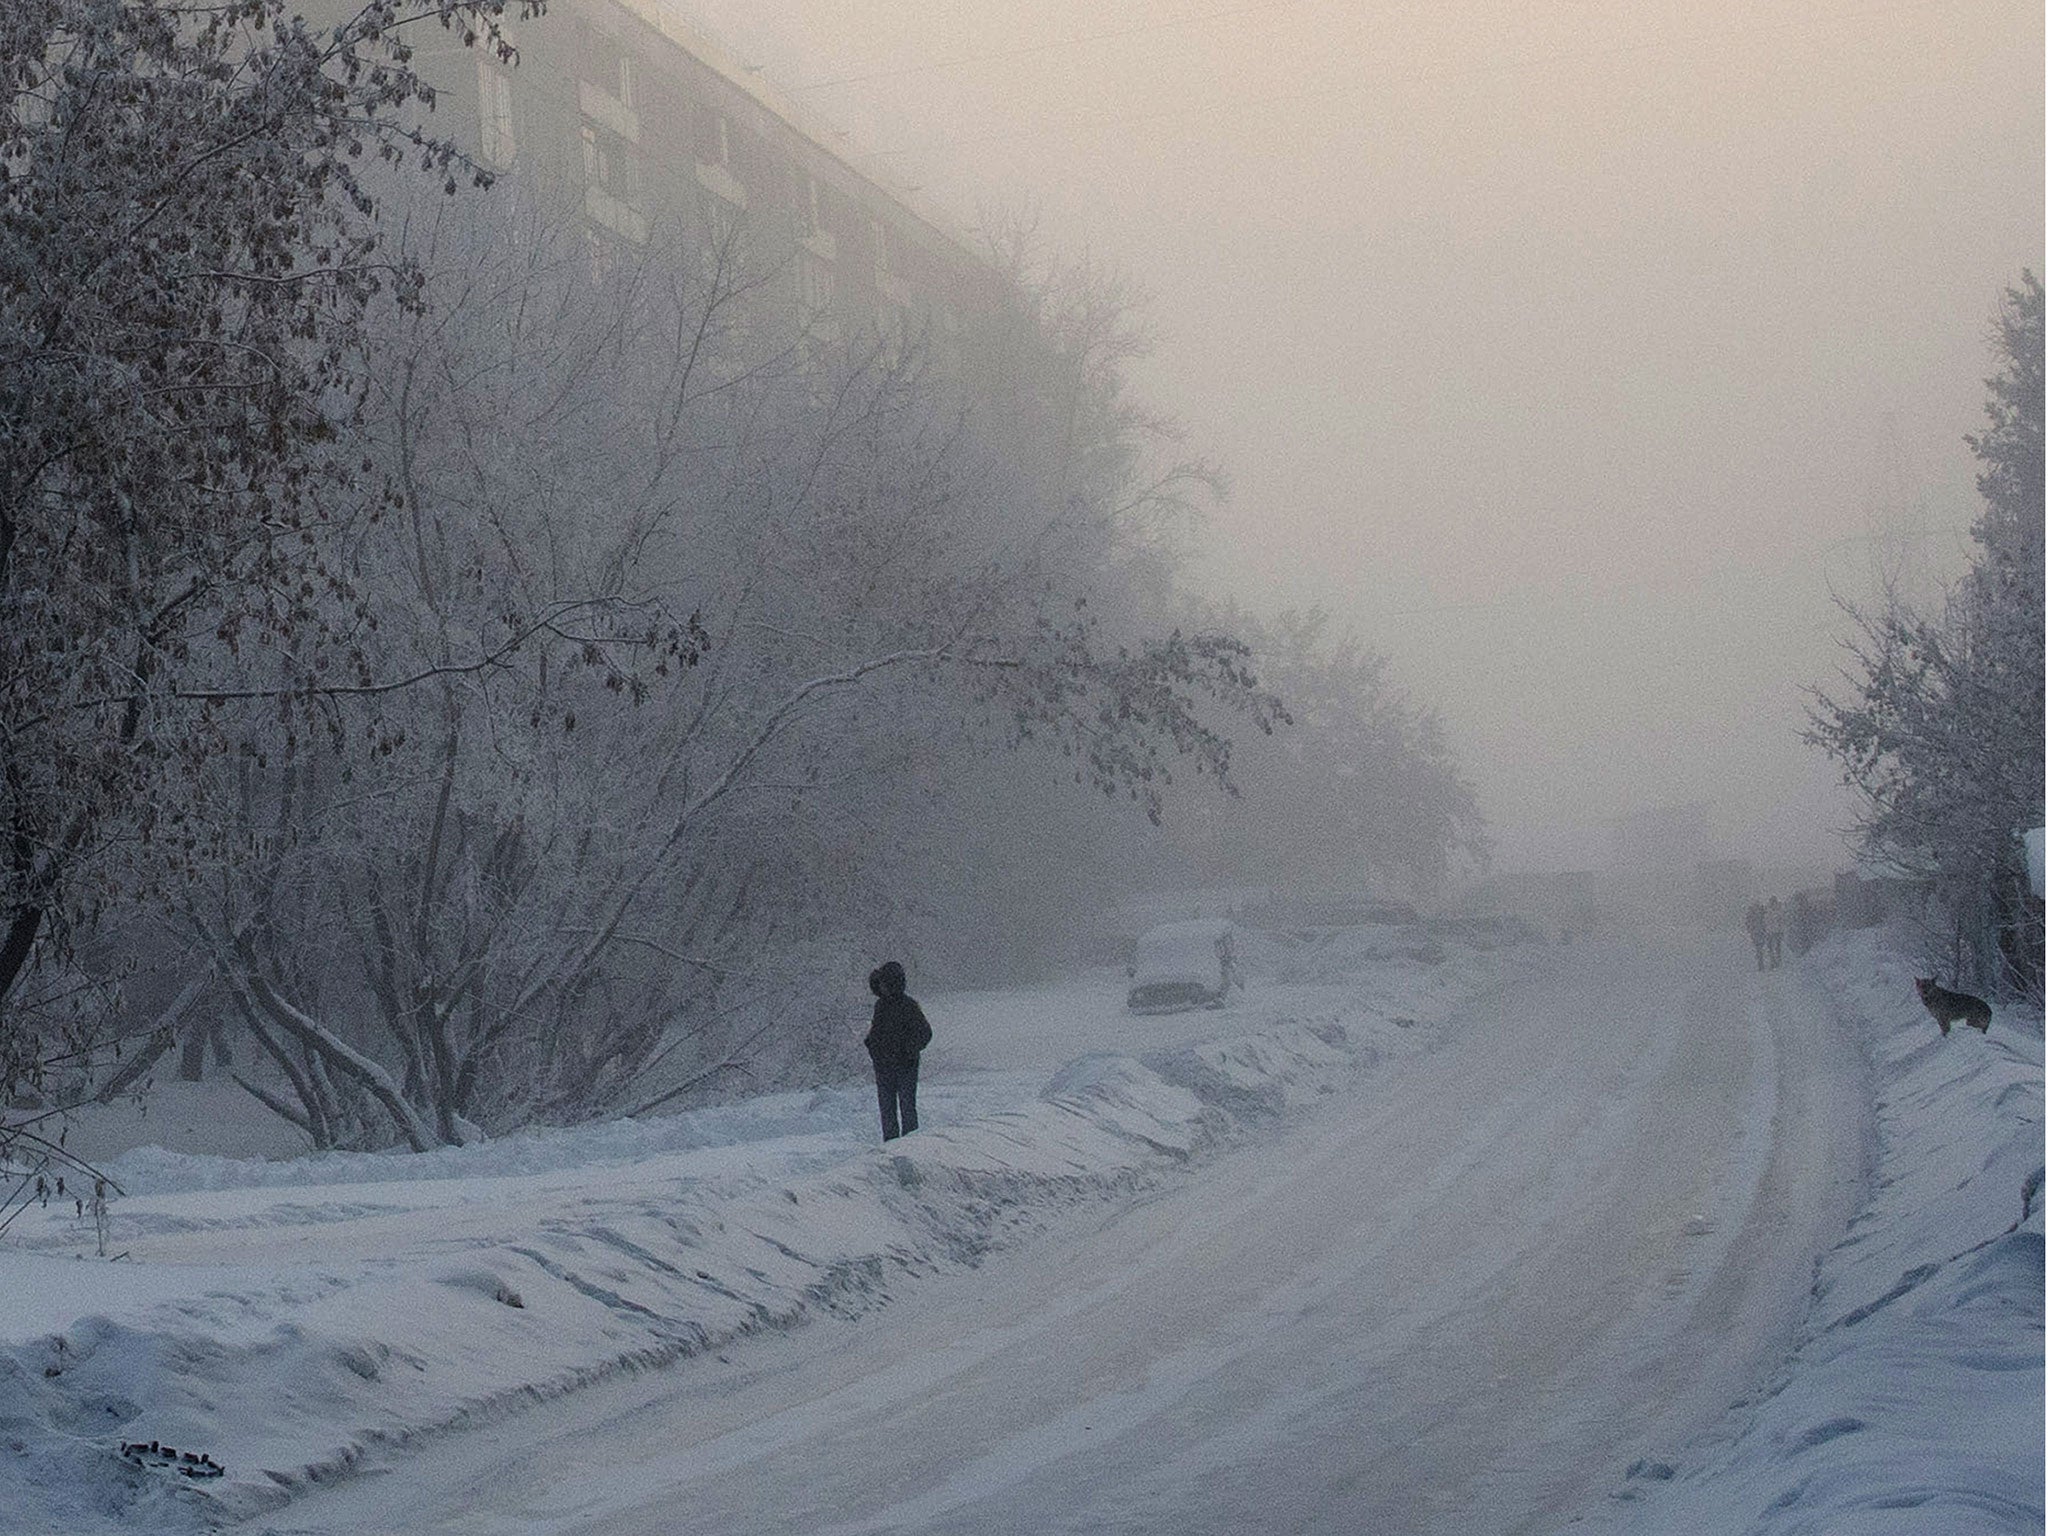 Temperatures in Siberia can plummet well below freezing